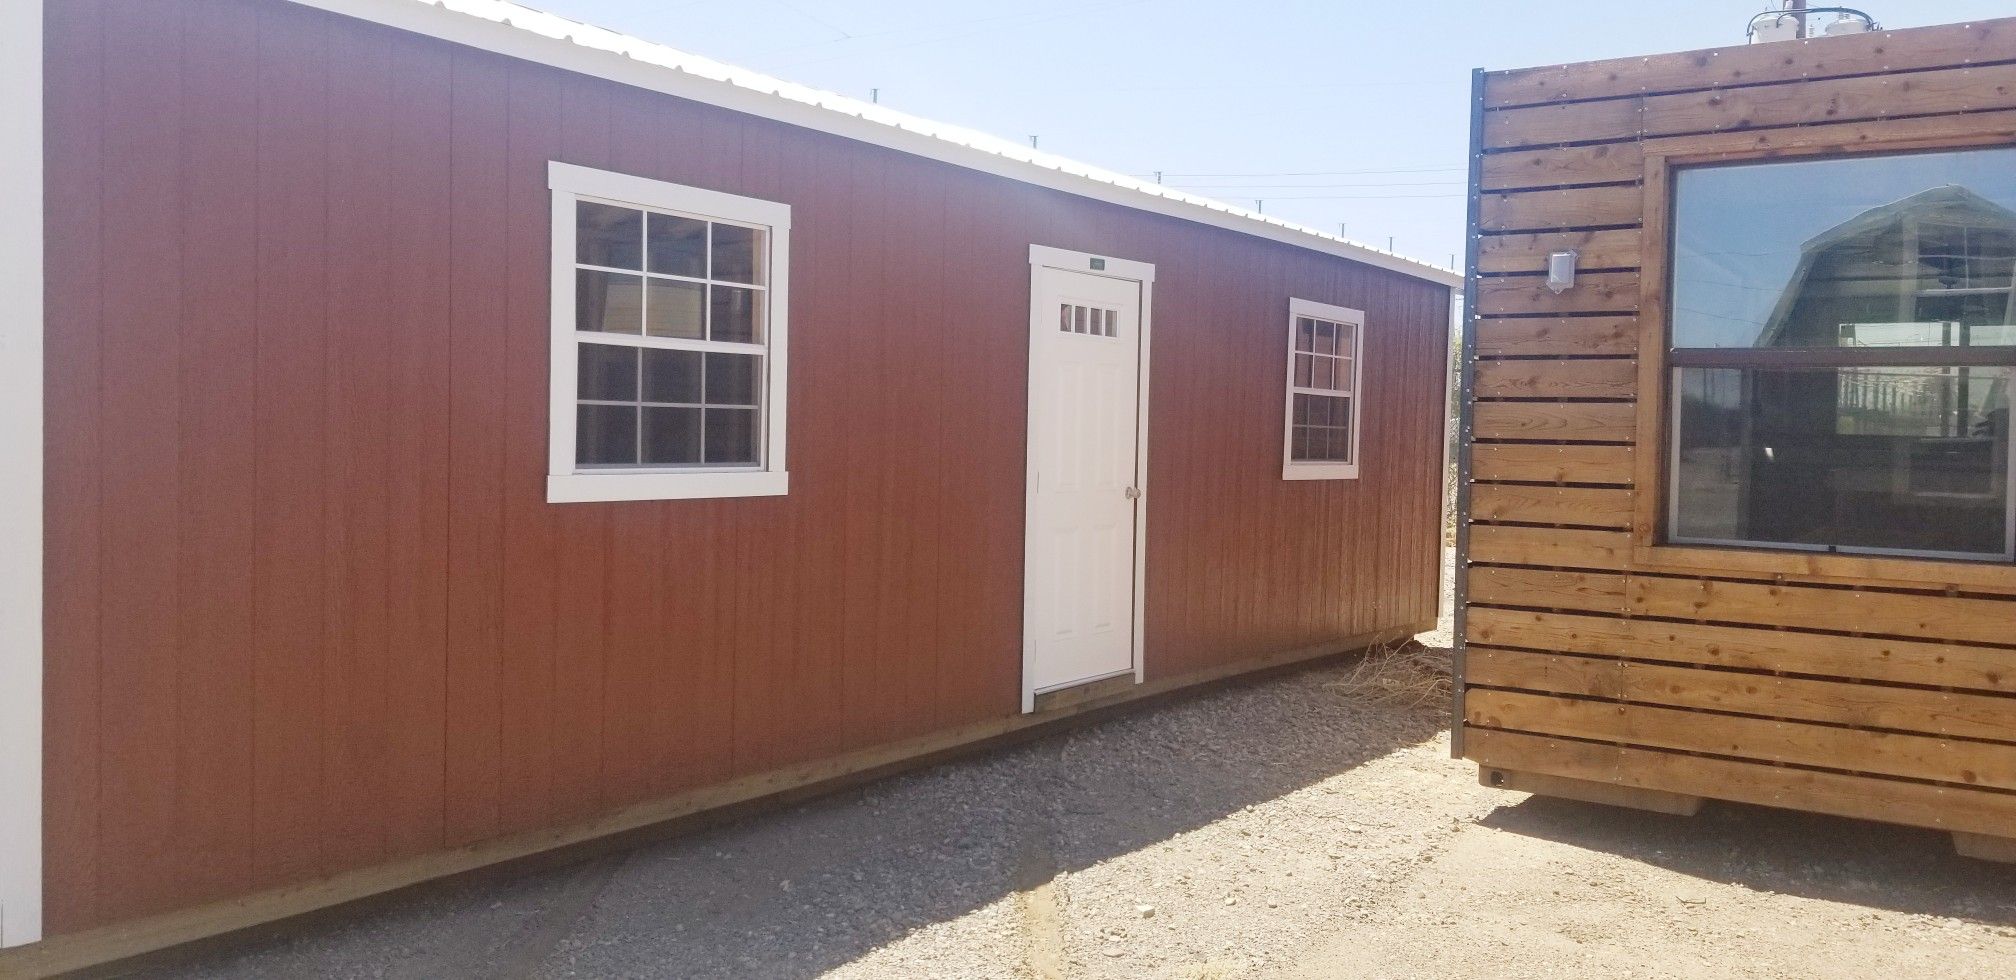 12 x 32 Garage, Shed, Building, Storage